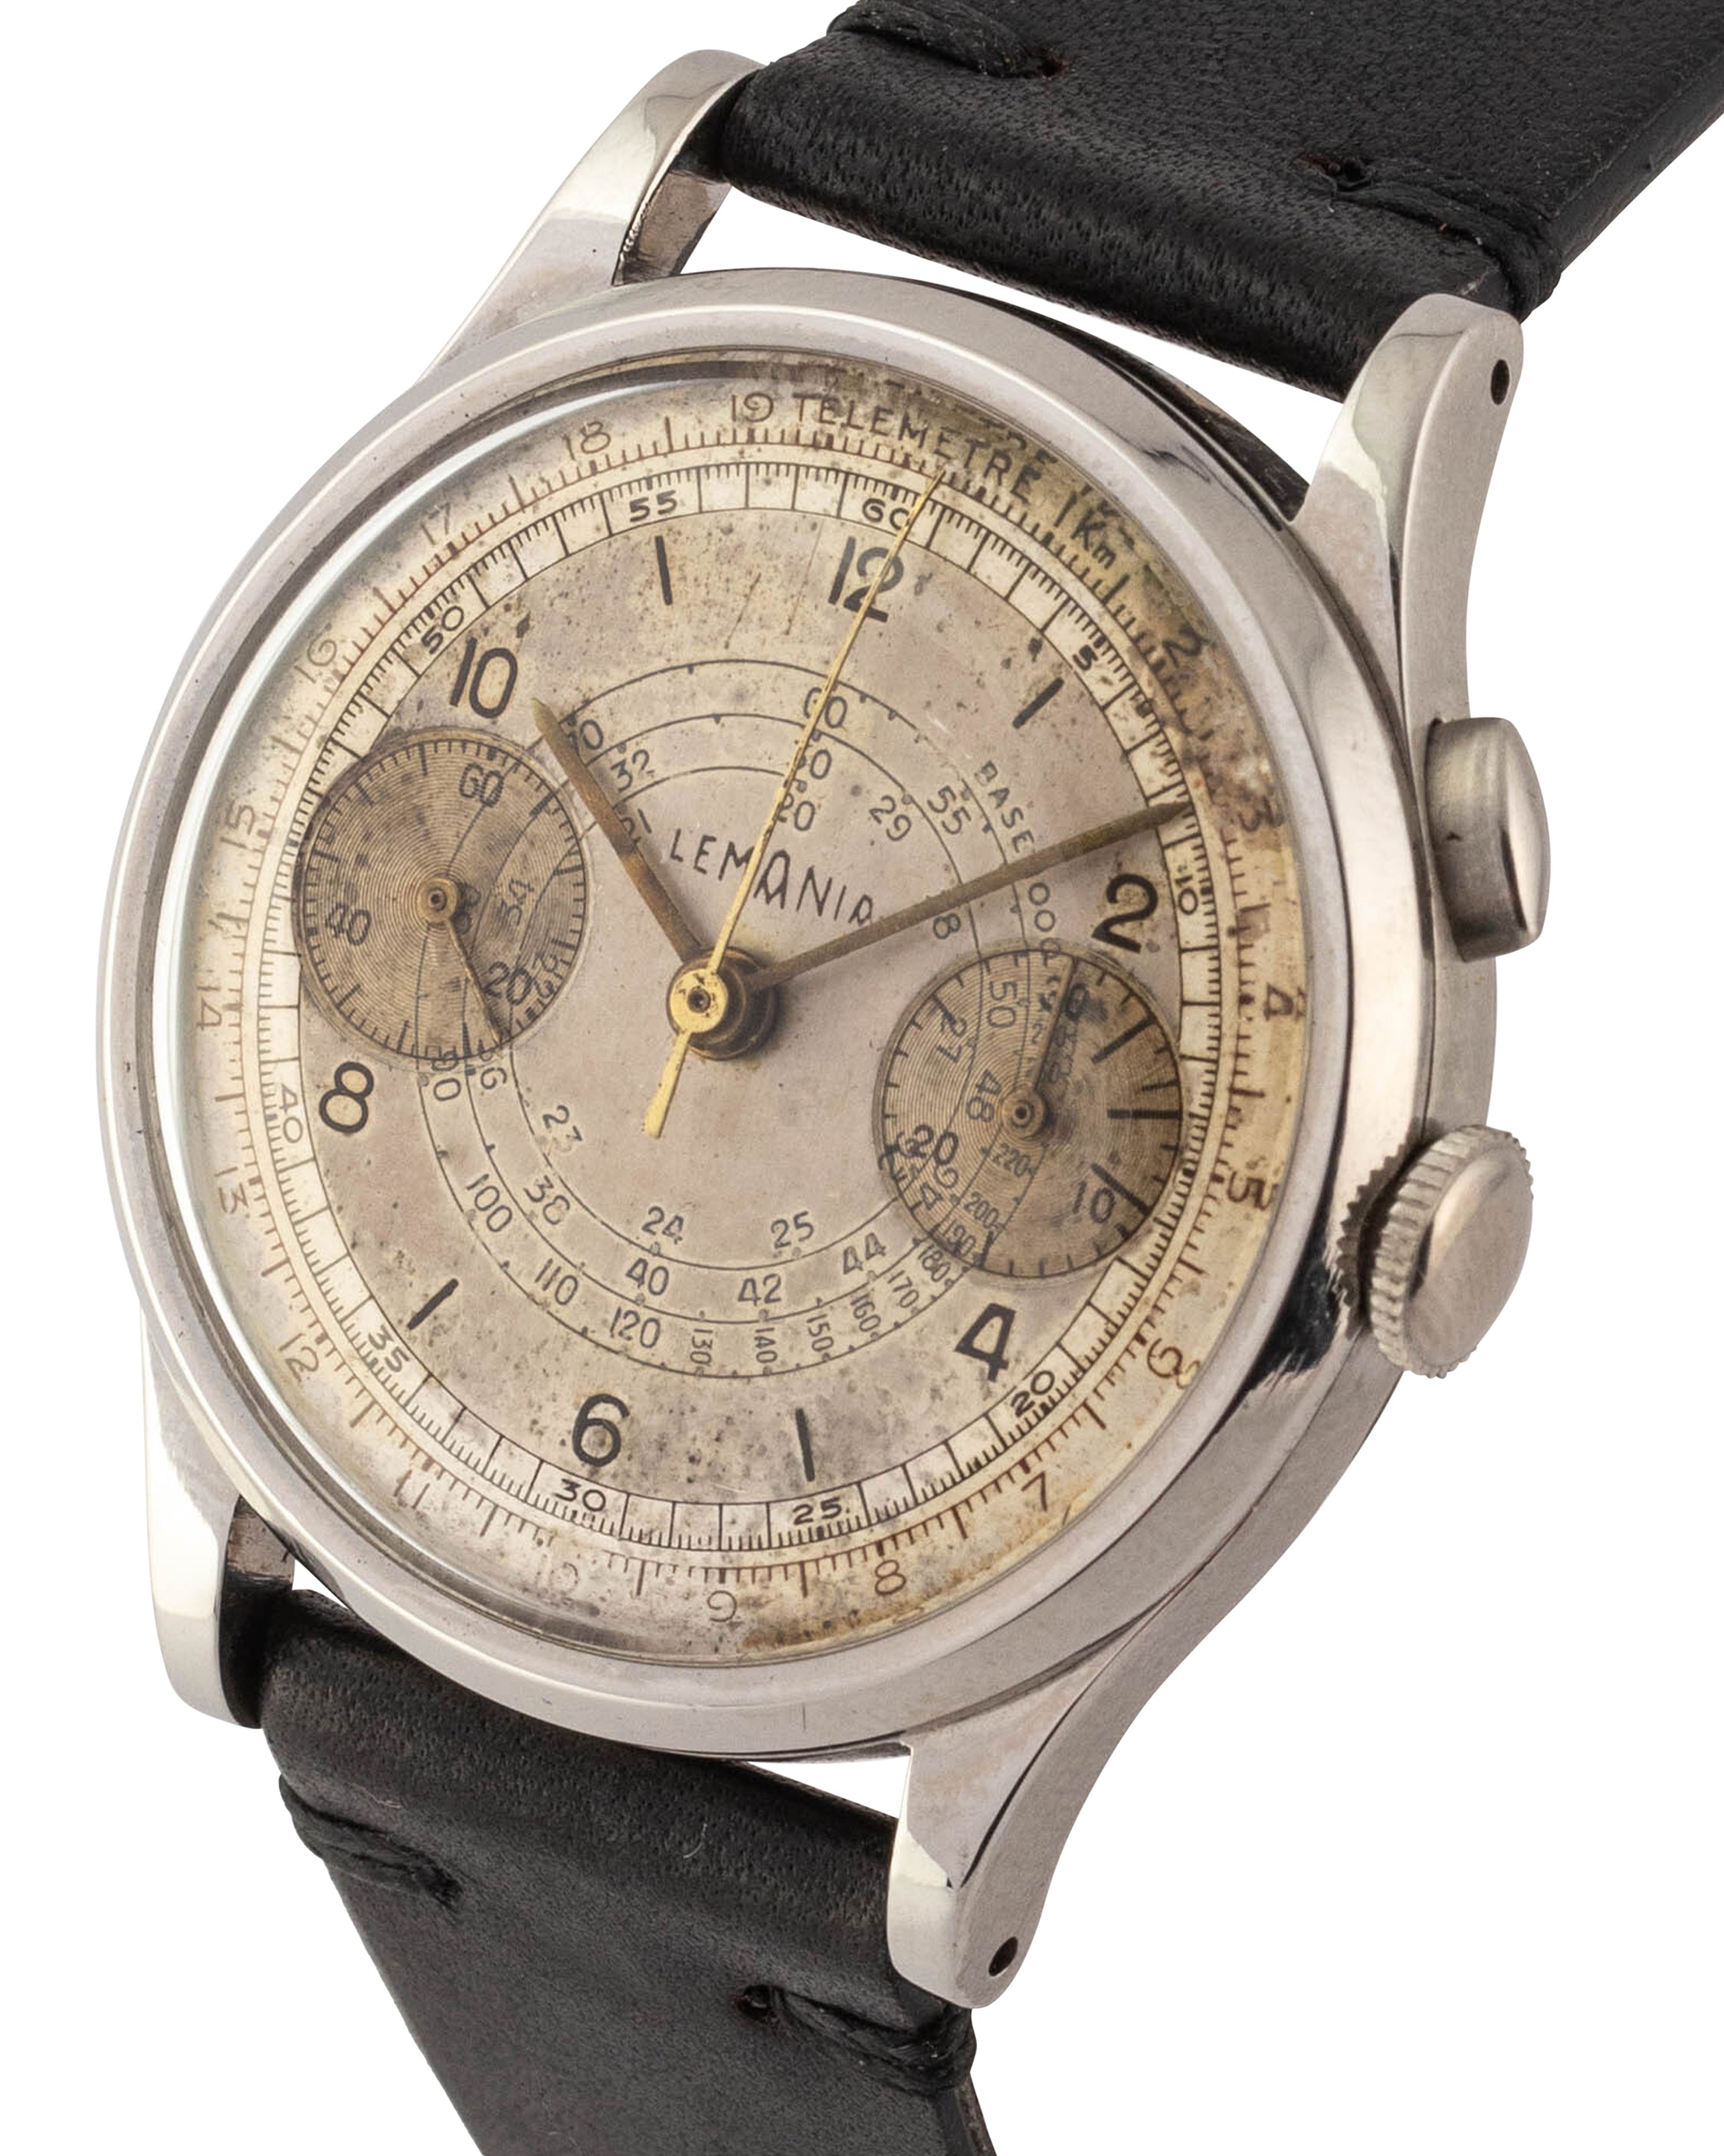 Lemania Chronograph "Sector dial" wrist watch